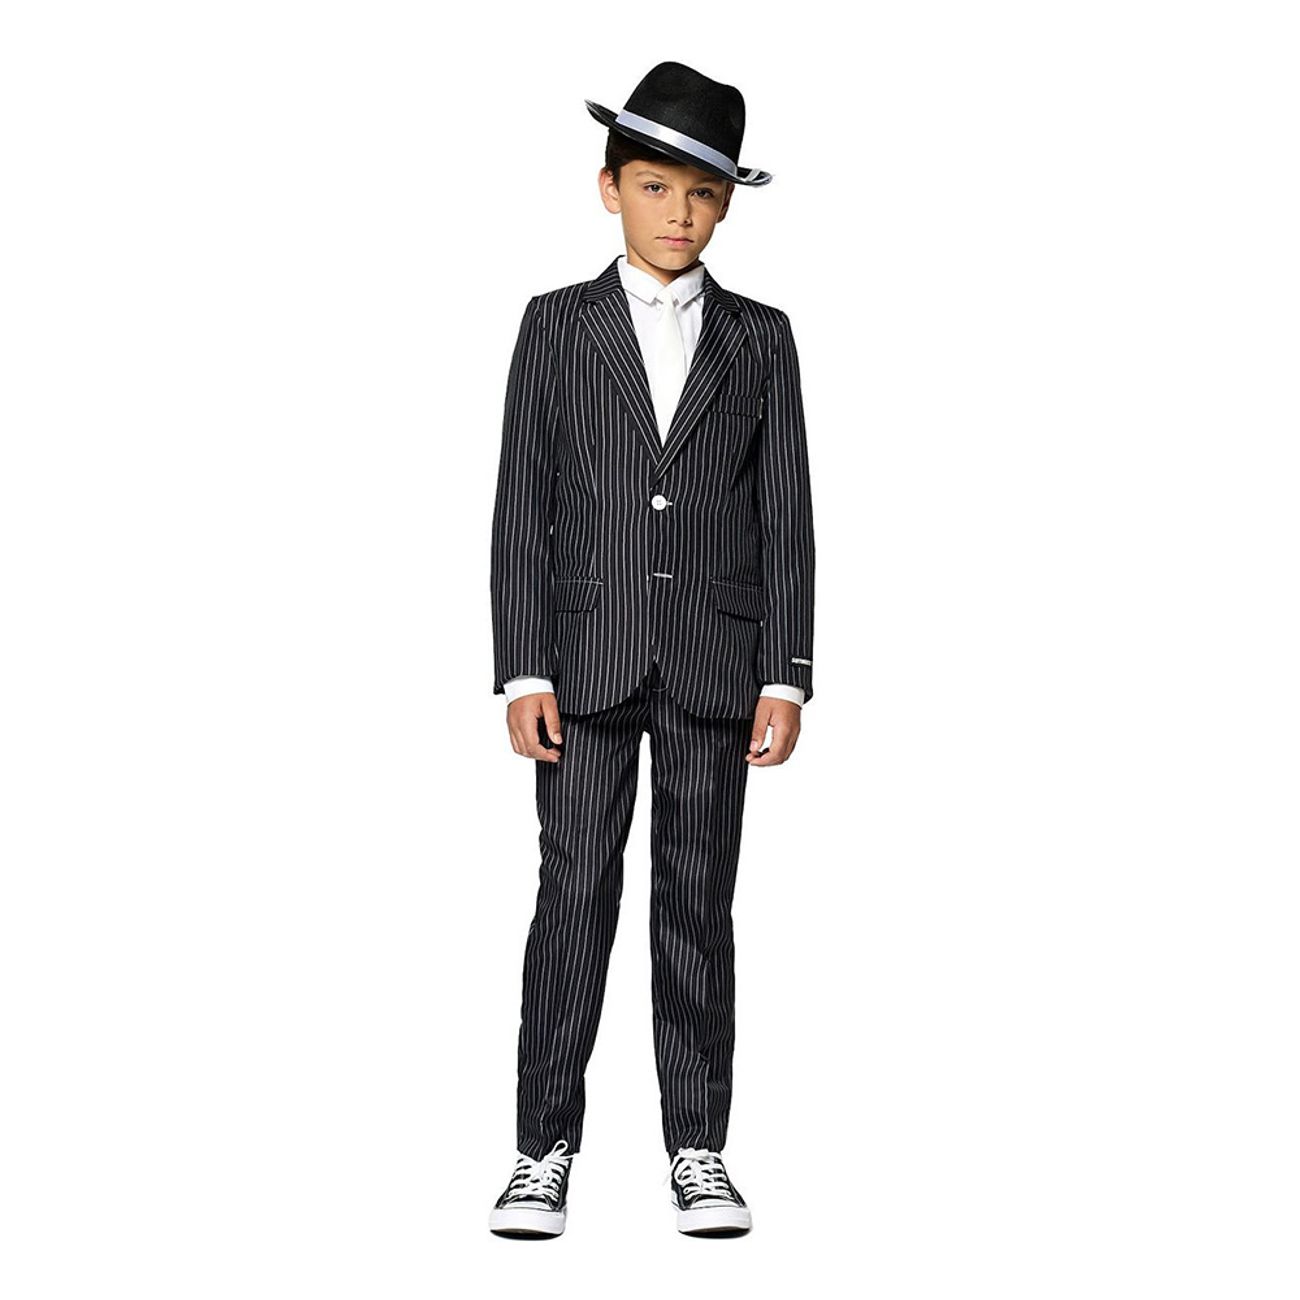 suitmeister-boys-gangster-pinstripe-black-kostym-79375-1